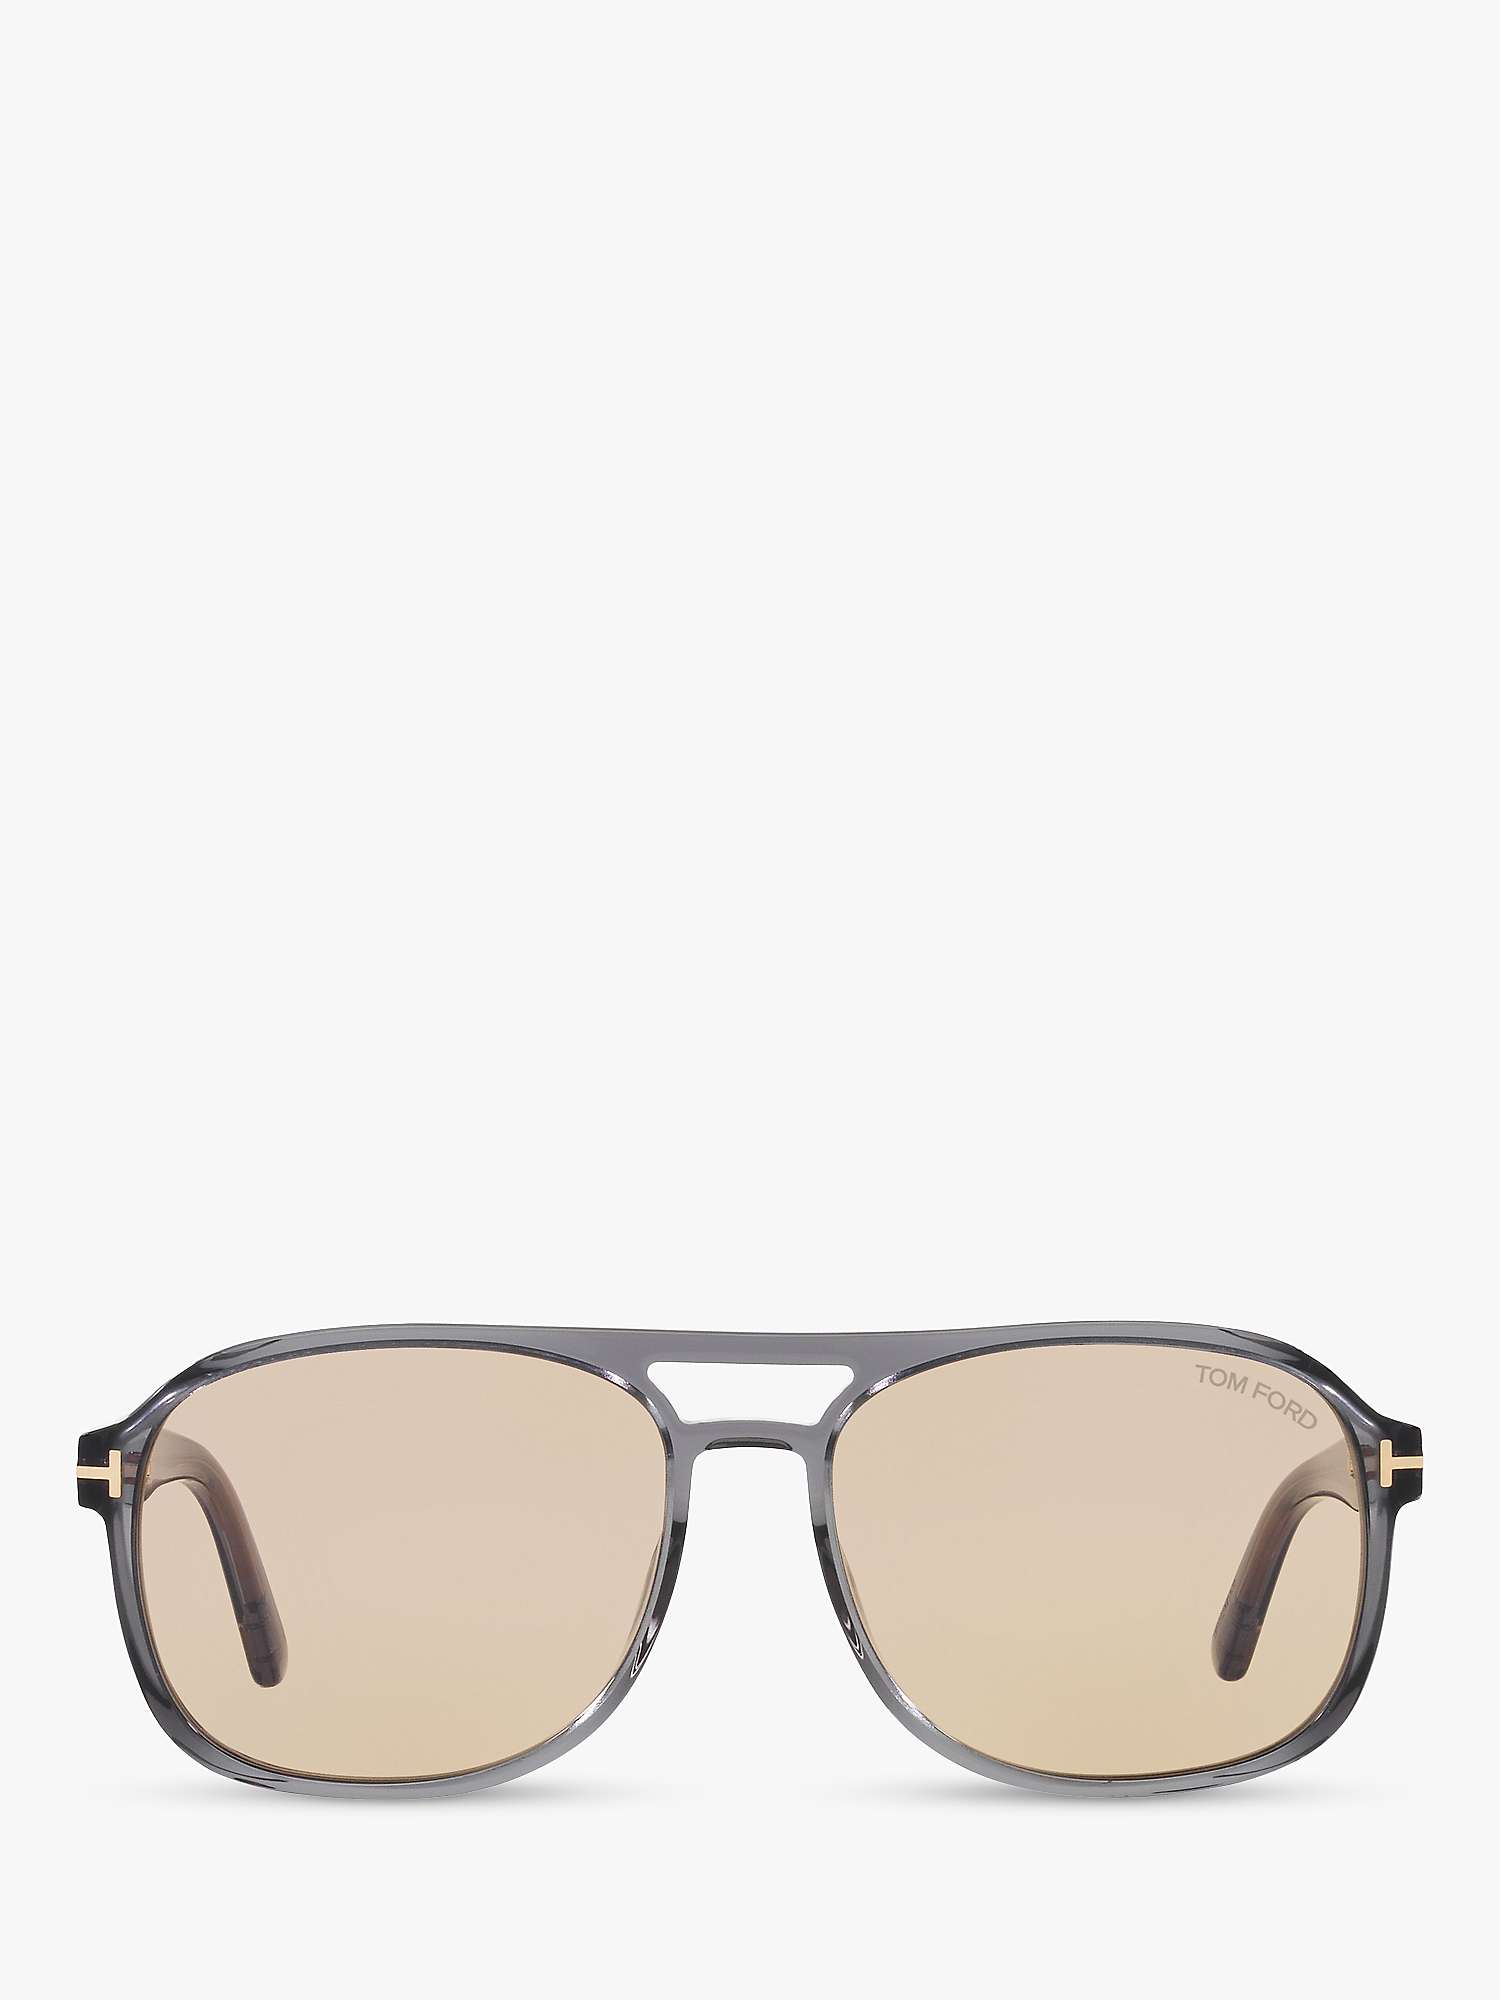 Buy TOM FORD TF1022 Men's Rosco Square Sunglasses, Grey/Beige Online at johnlewis.com